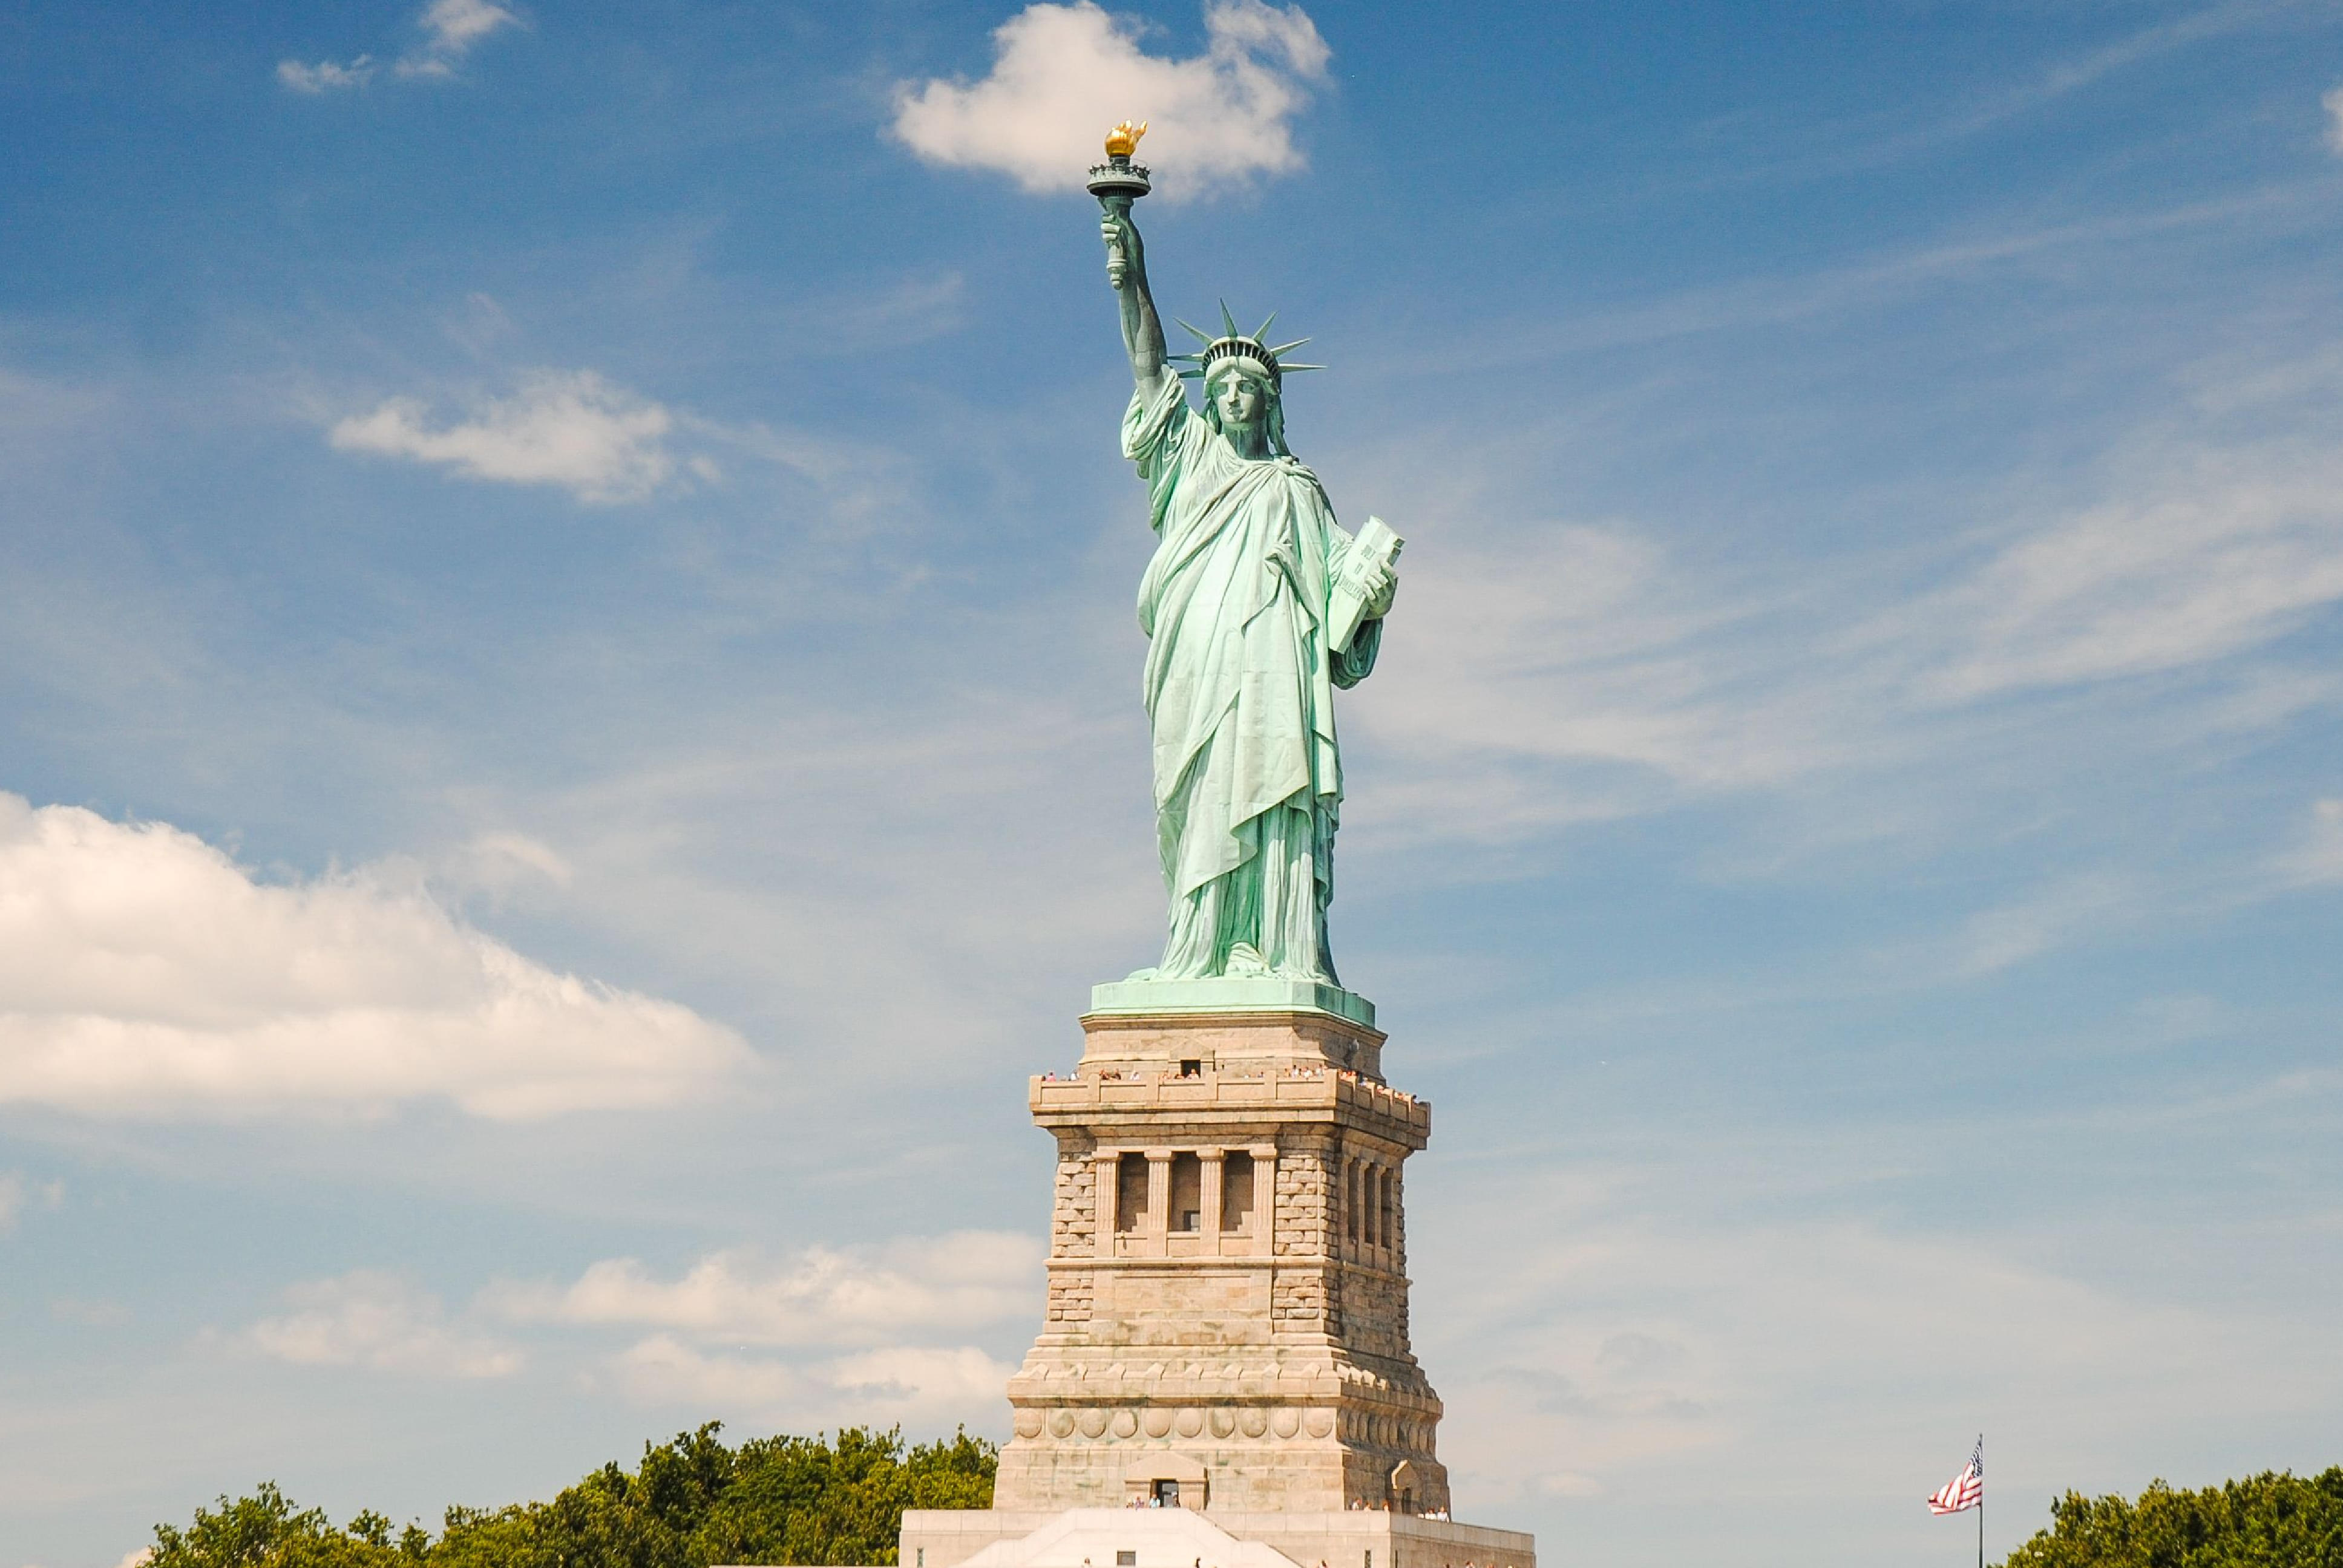 Statue of Liberty and Ellis Island Cruise, New York